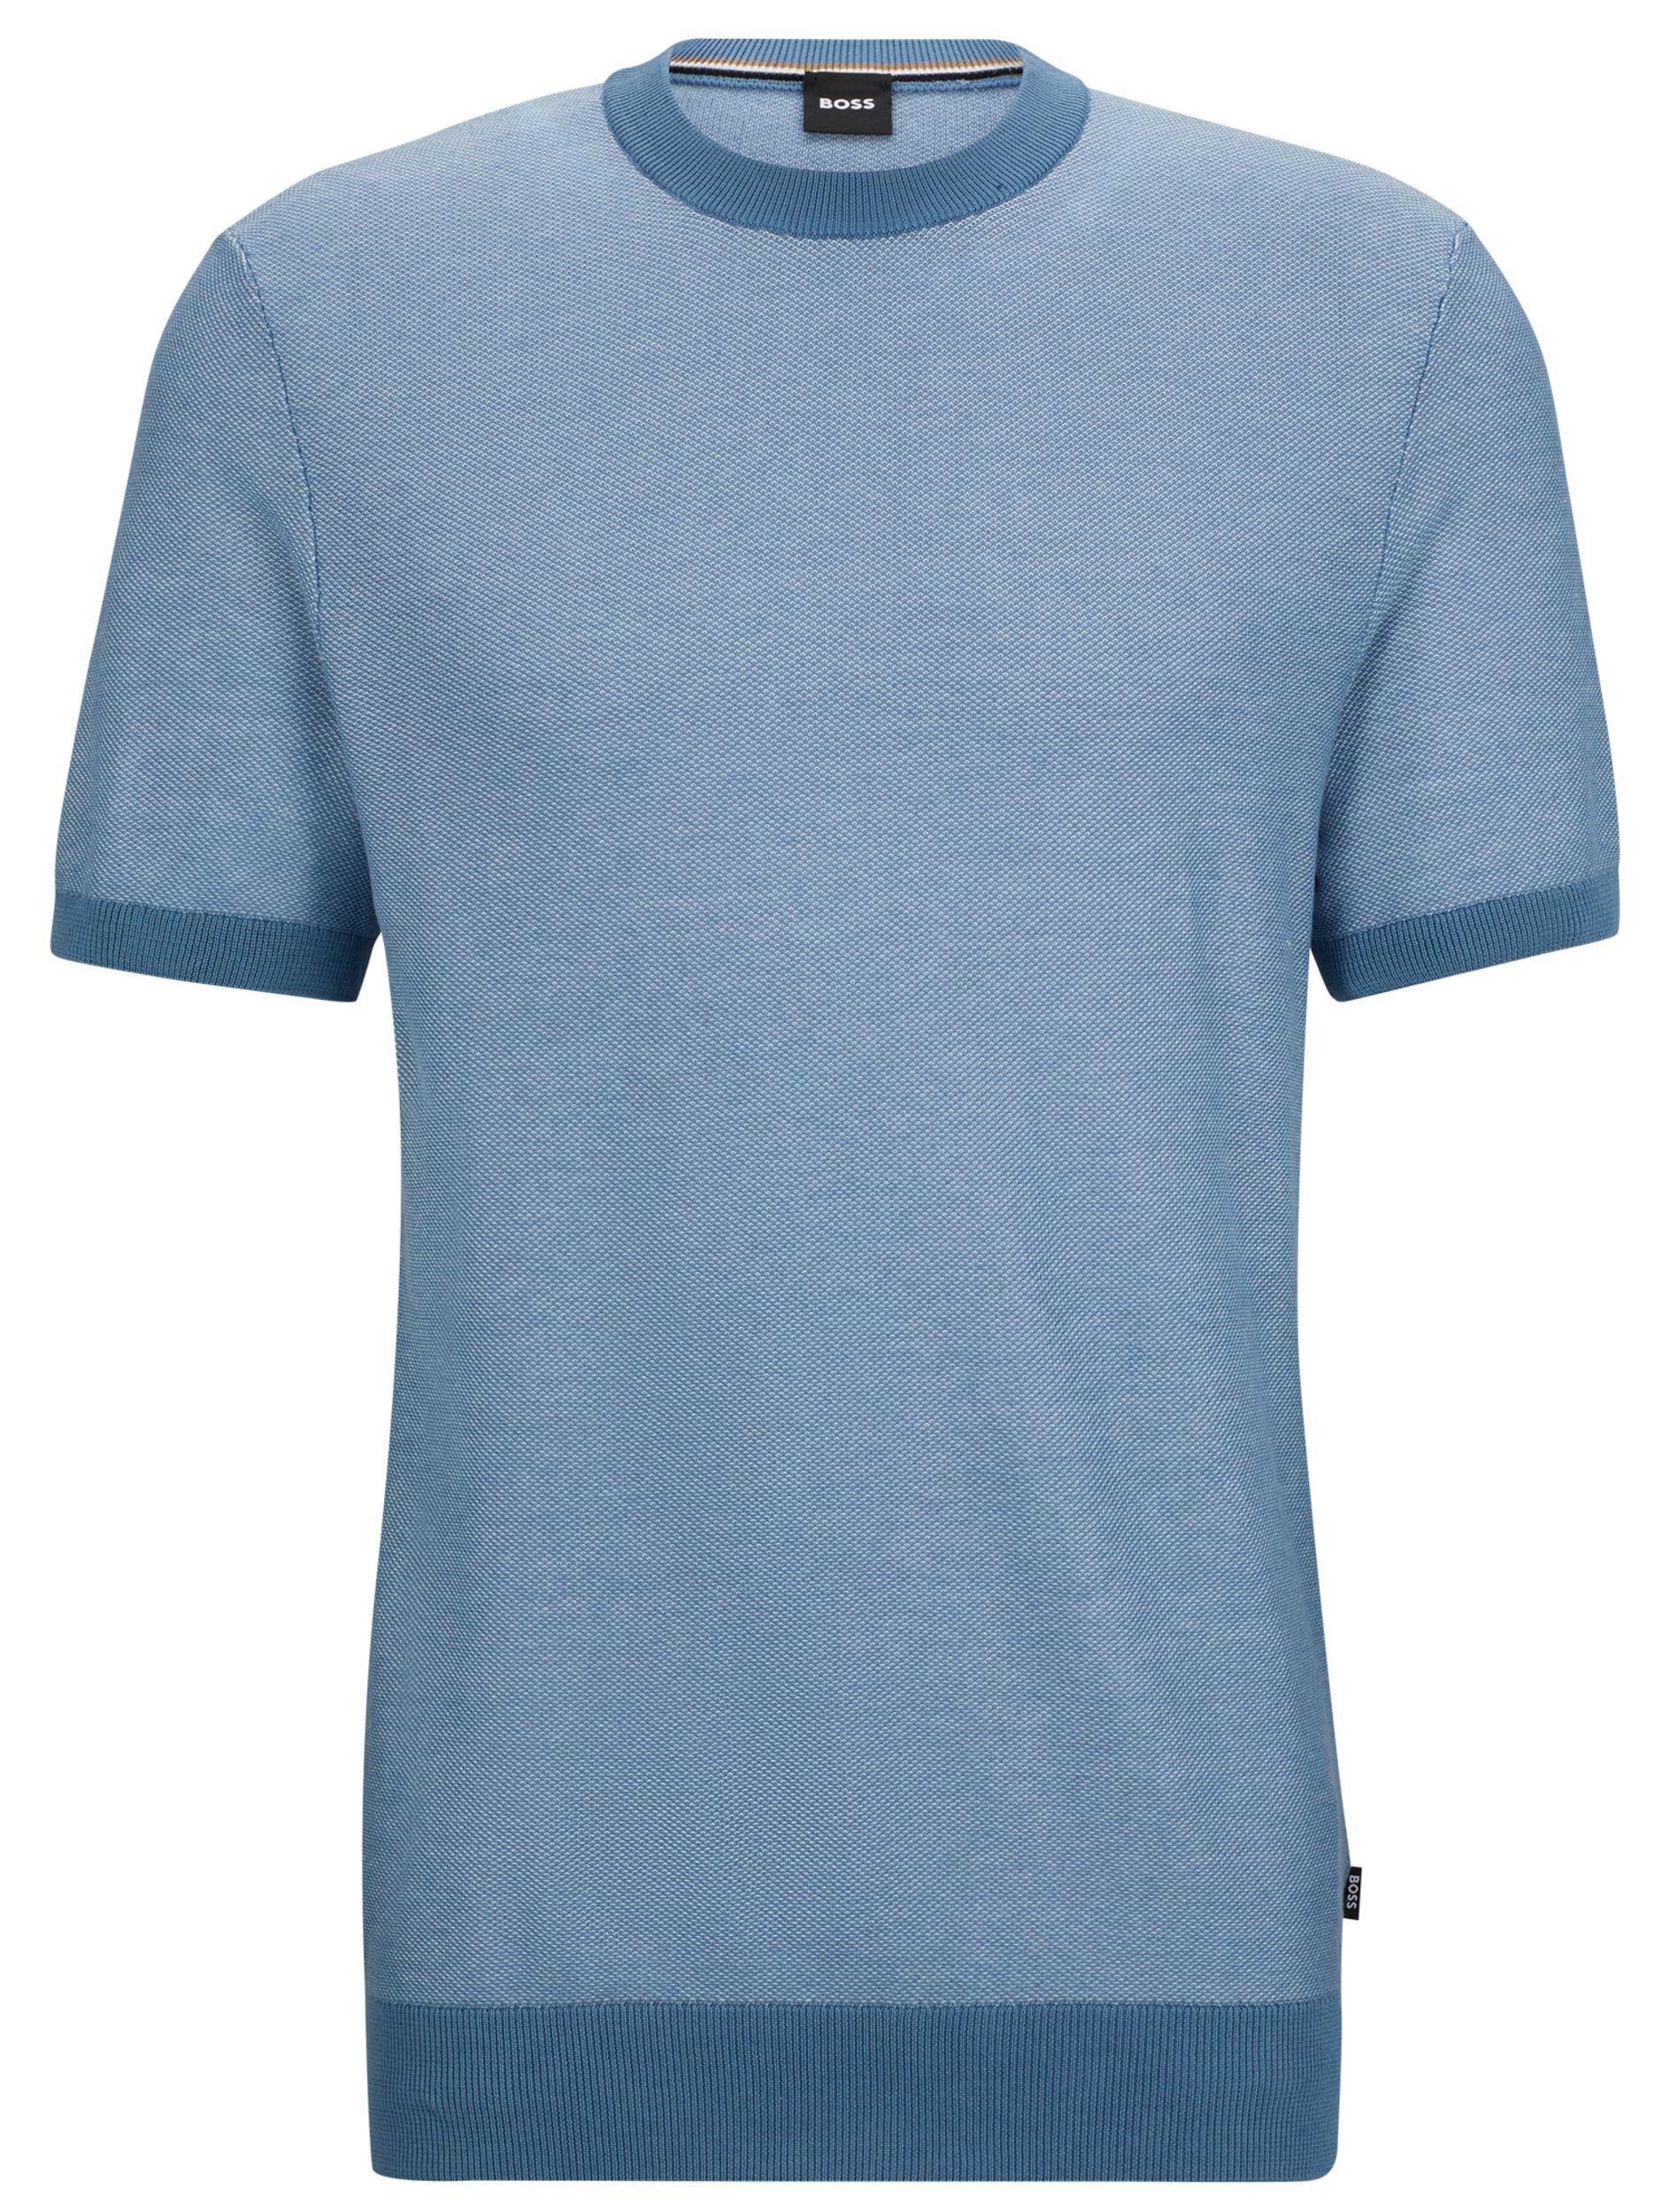 Boss Tantino T-shirt KM Licht blauw 094622-001-L